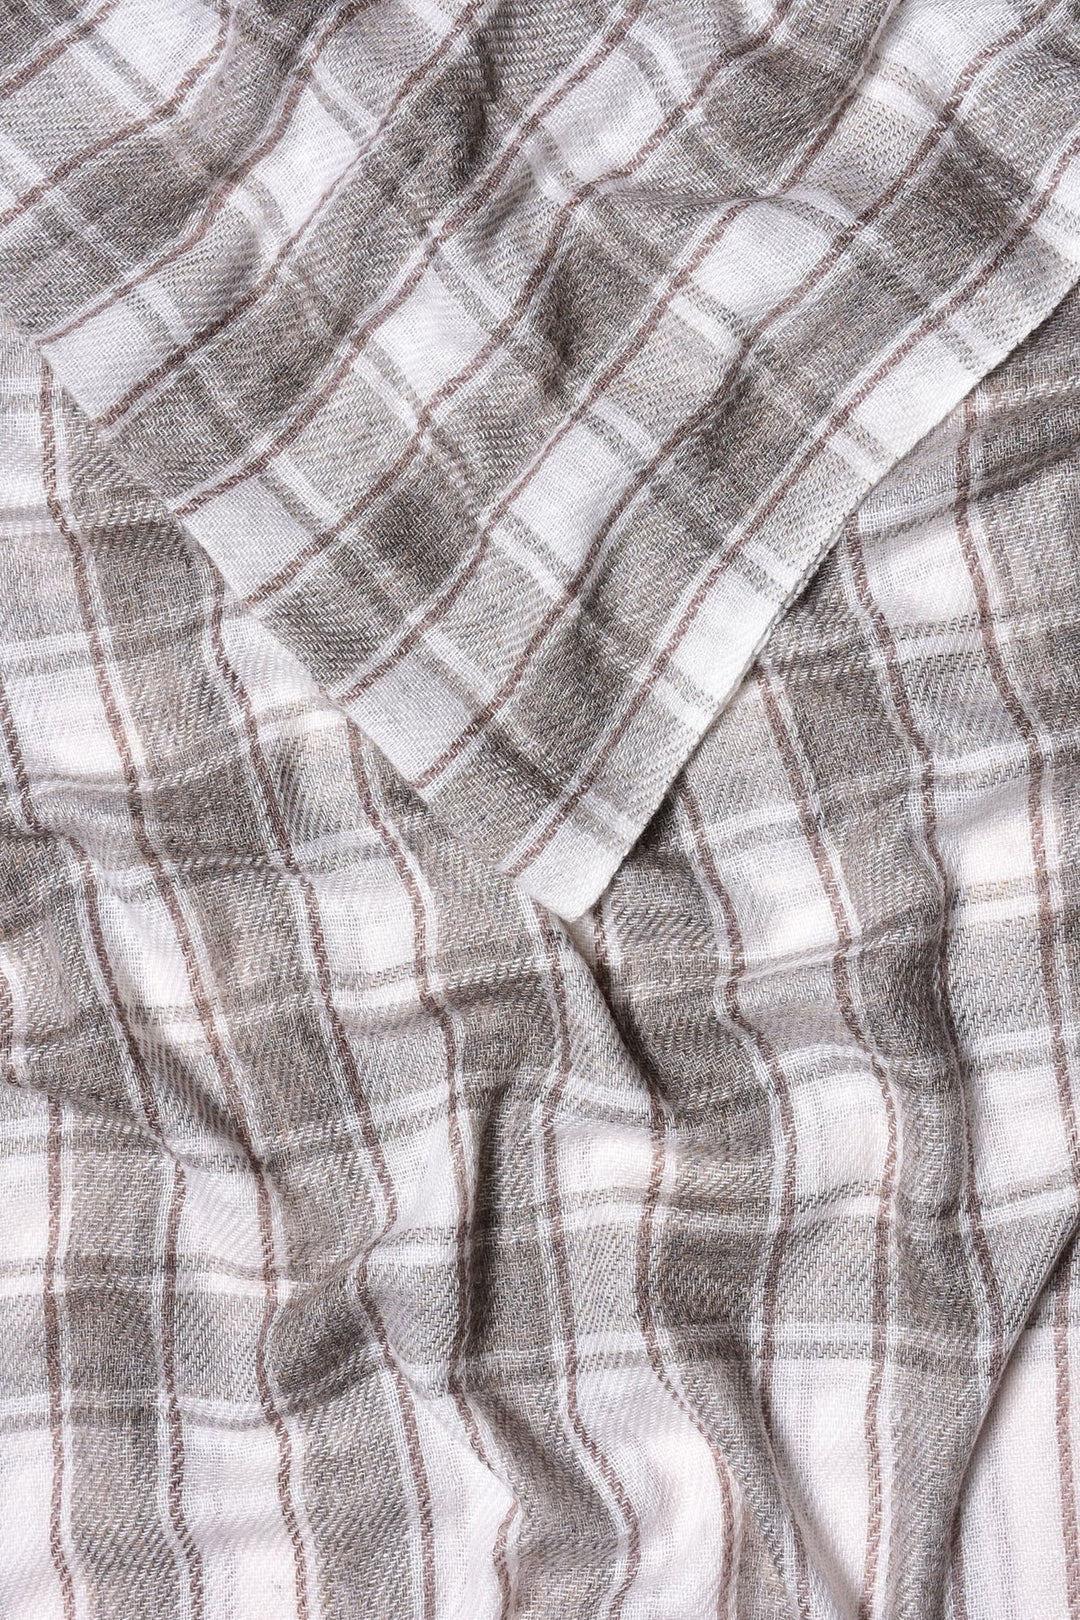 Cashmere Stole - Liberty White & Gray | Saorsa Handwoven Soft Cashmere Stole - White & Gray